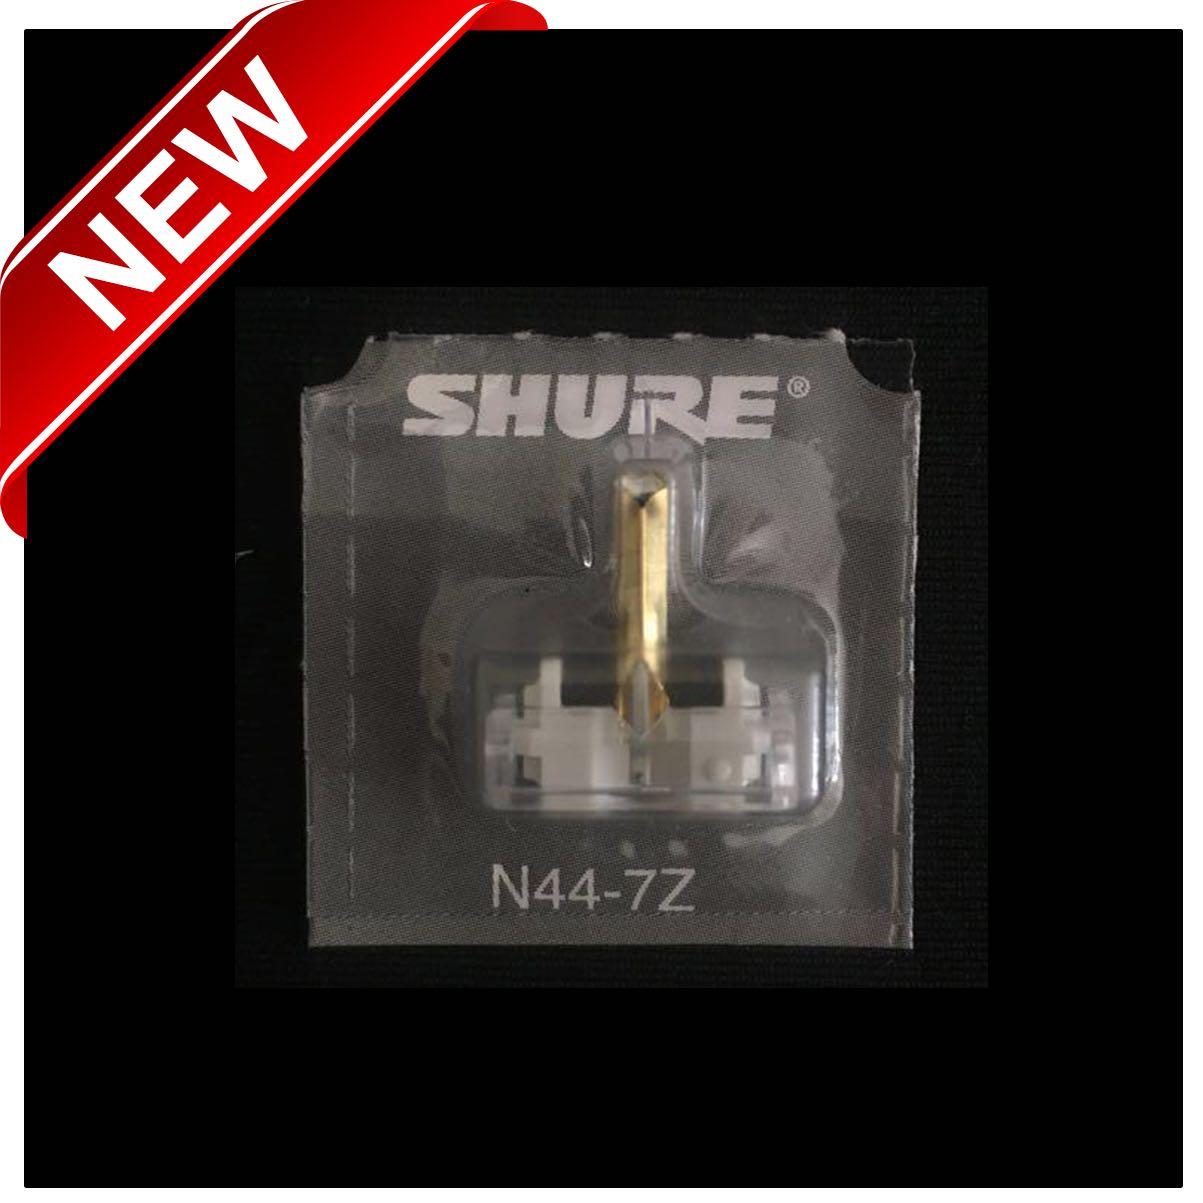 Shure N447 N44 7 Dj Stylus For M447 Cartridge Music Media Music Accessories On Carousell